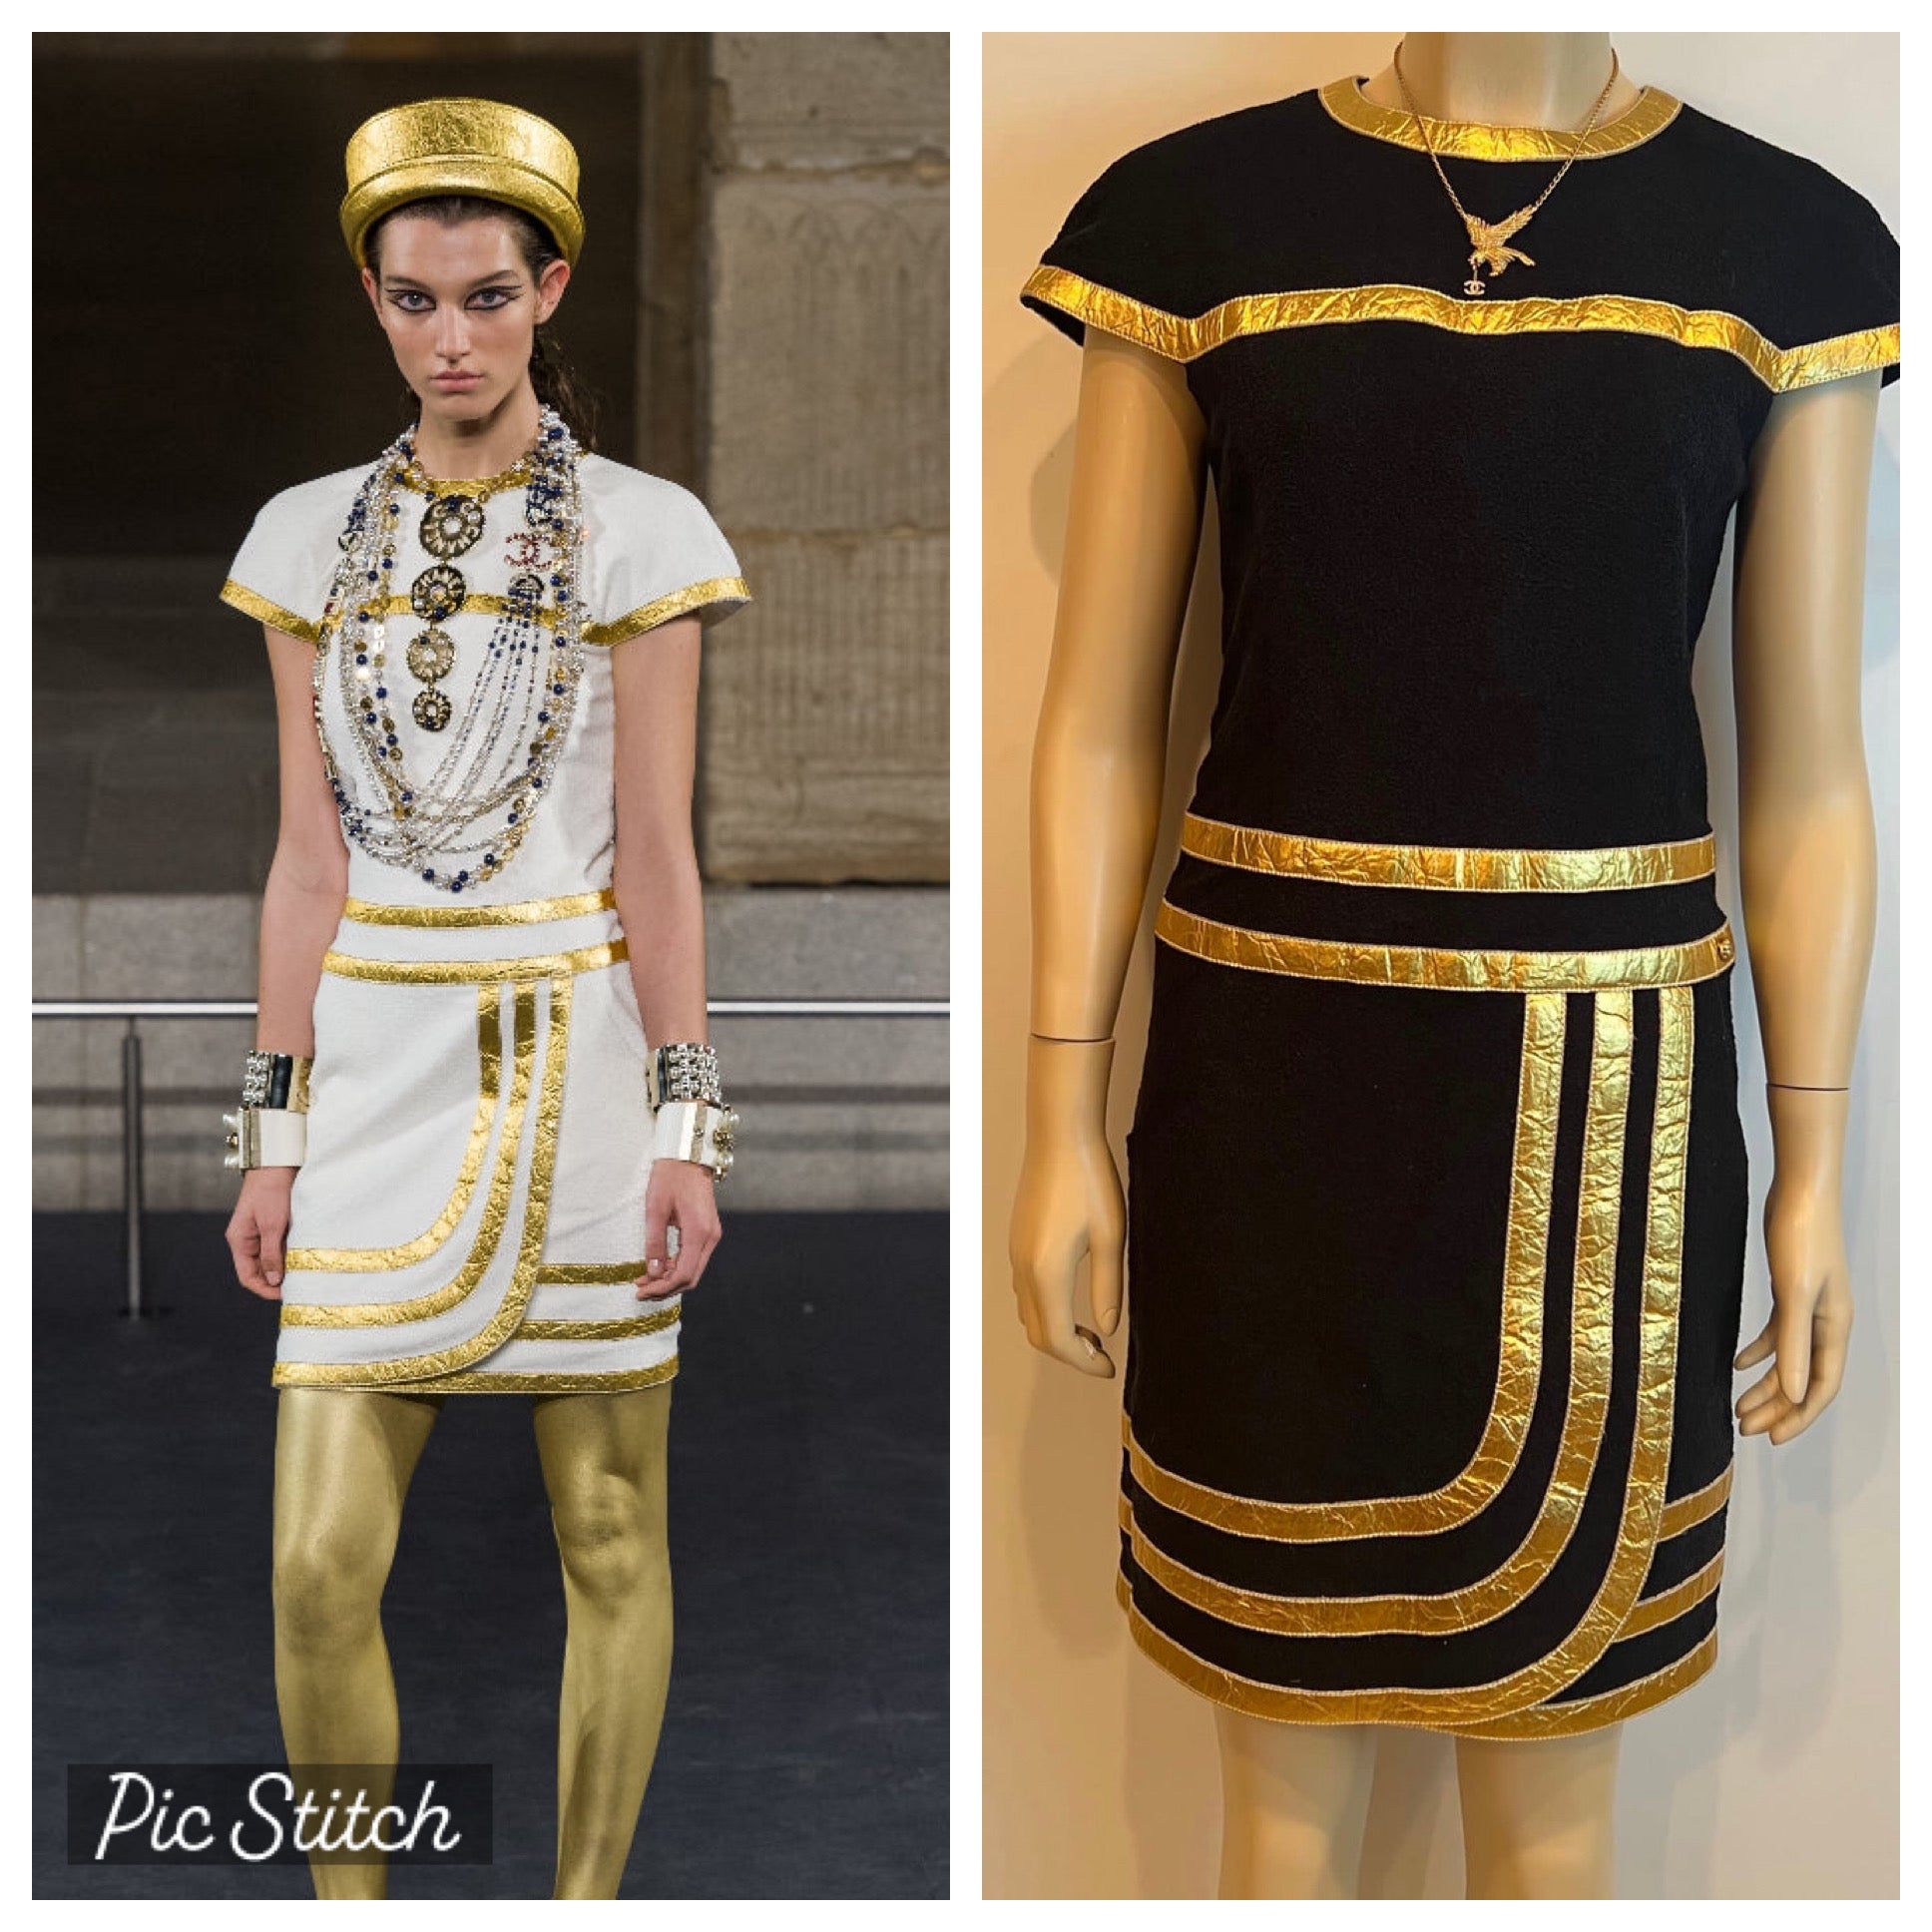 HelensChanel Nwt Chanel 19A 2019 Fall Paris Egypt Runway Black Gold Leather Trim Dress FR 34 US 4